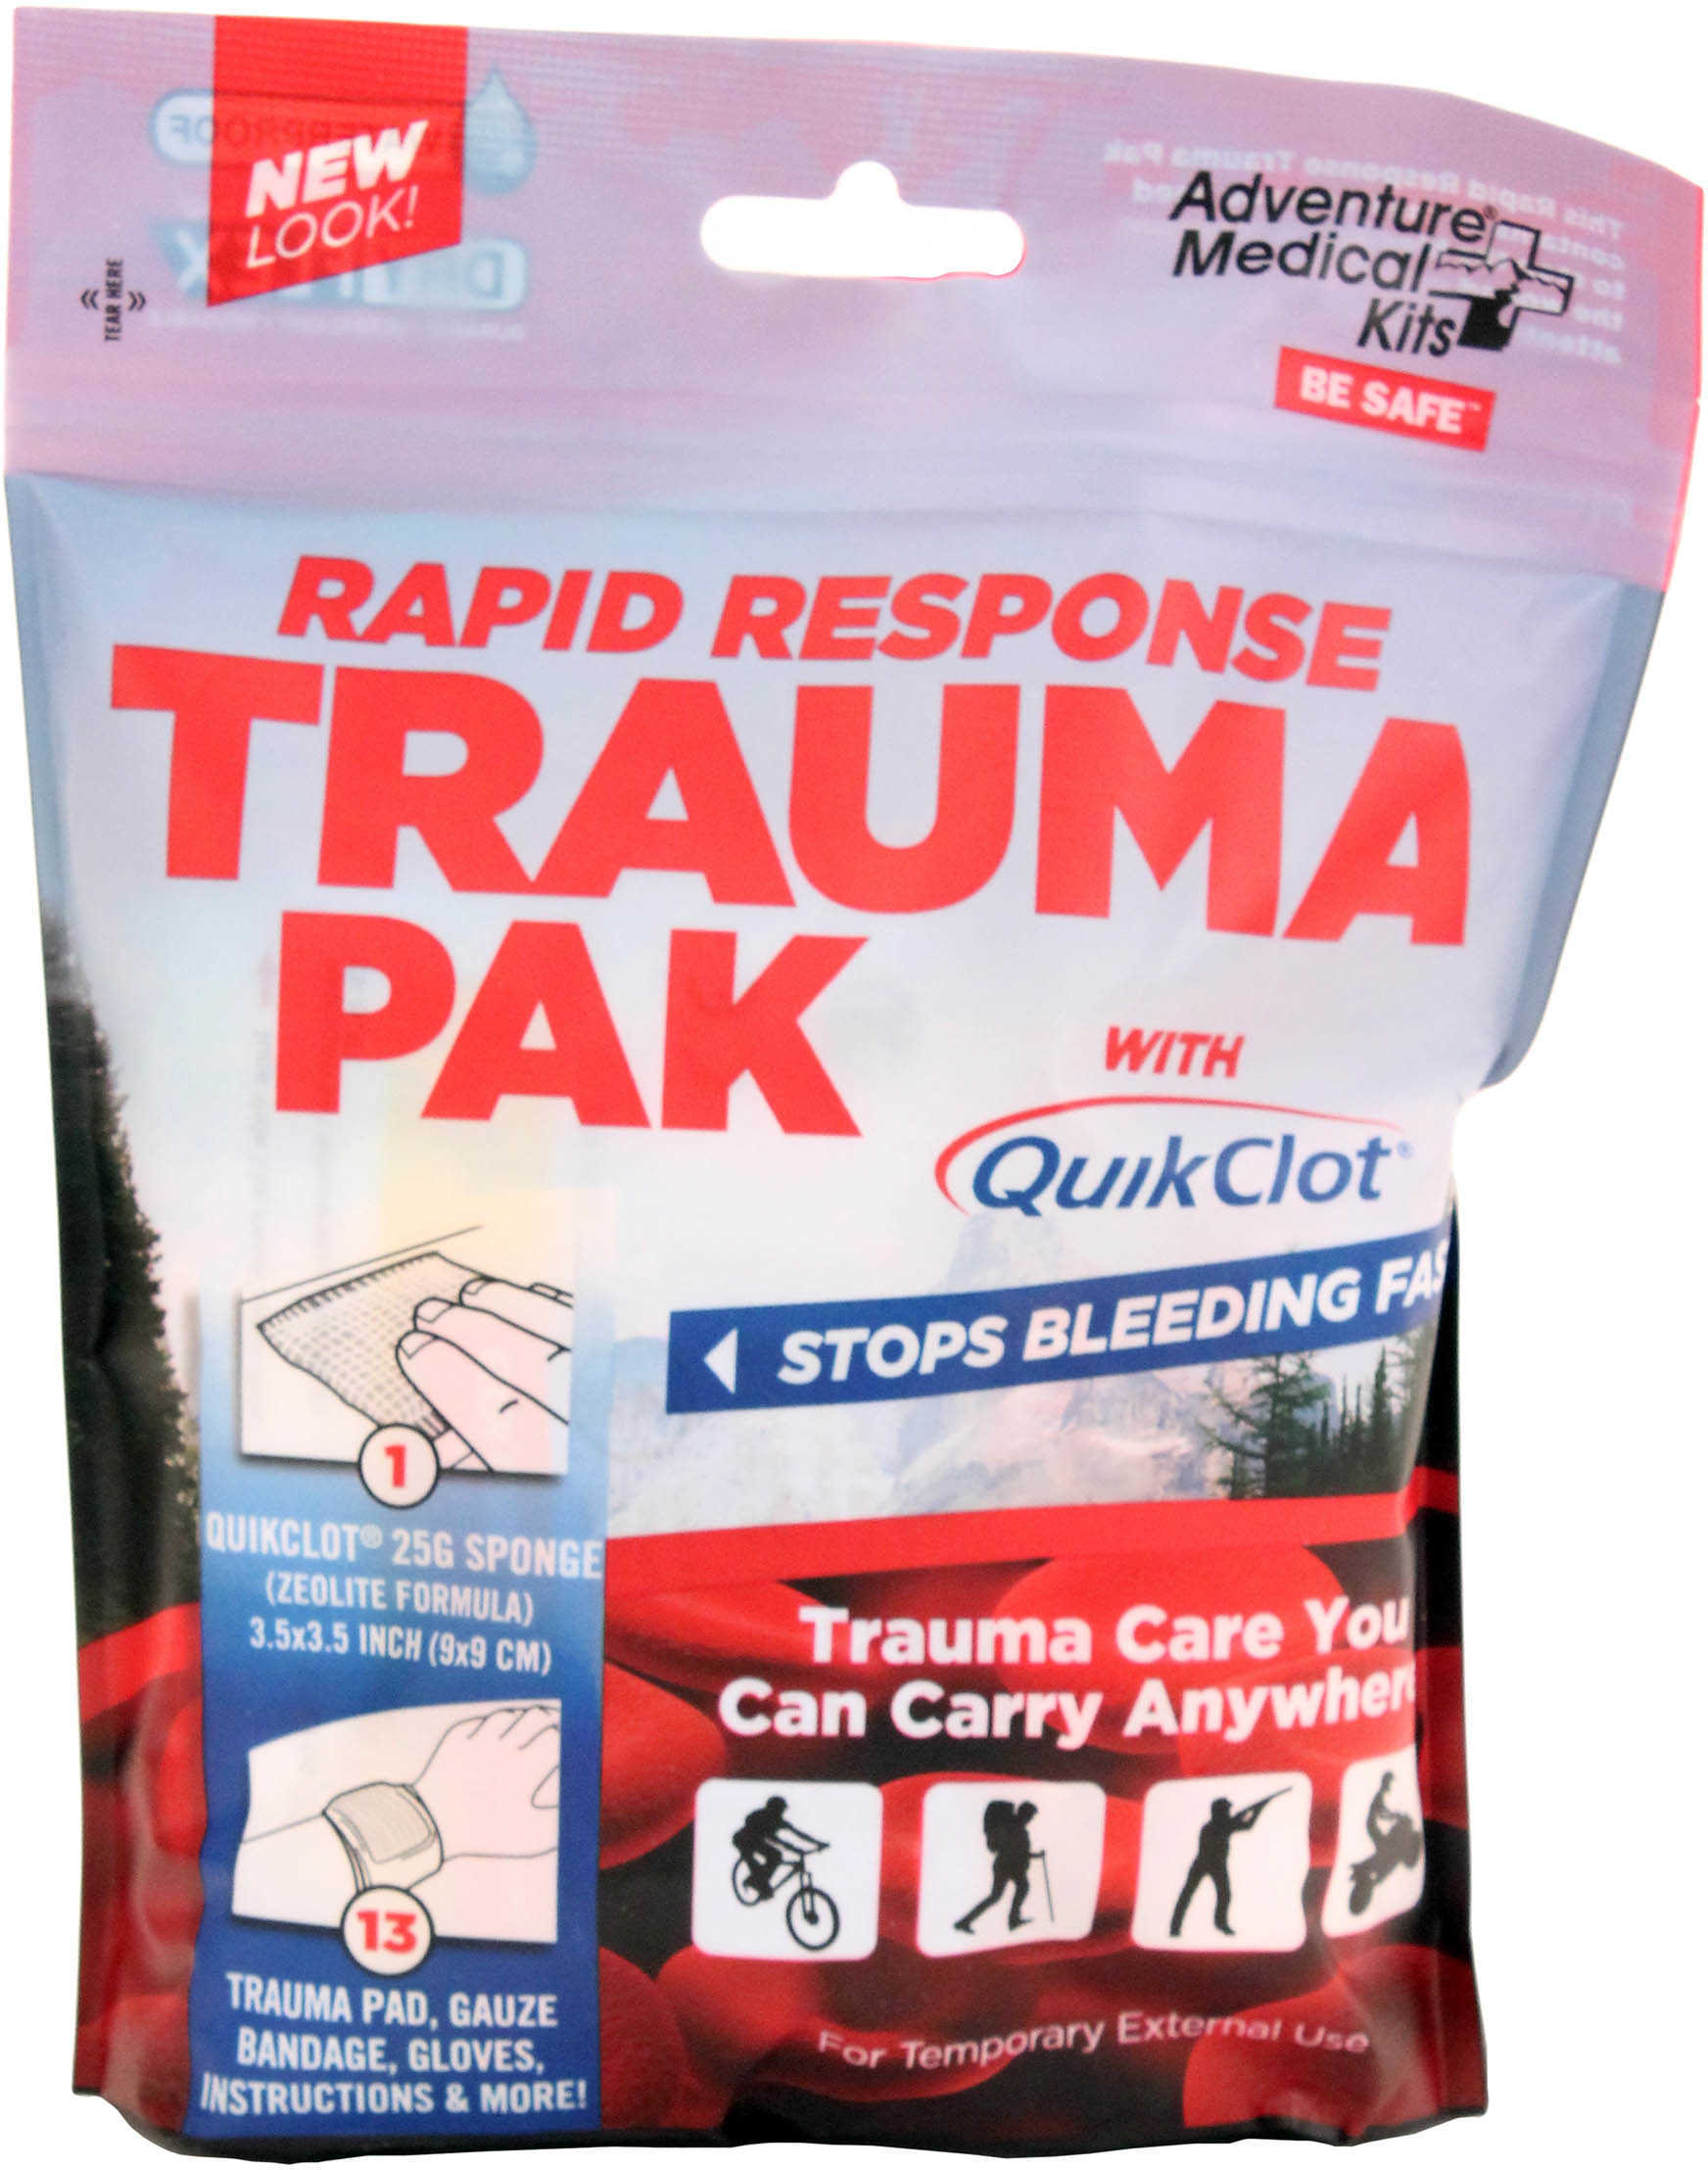 Adventure Medical Kits / Tender Corp AMK Rapid Response Trauma Pack W/ QUIKCLOT